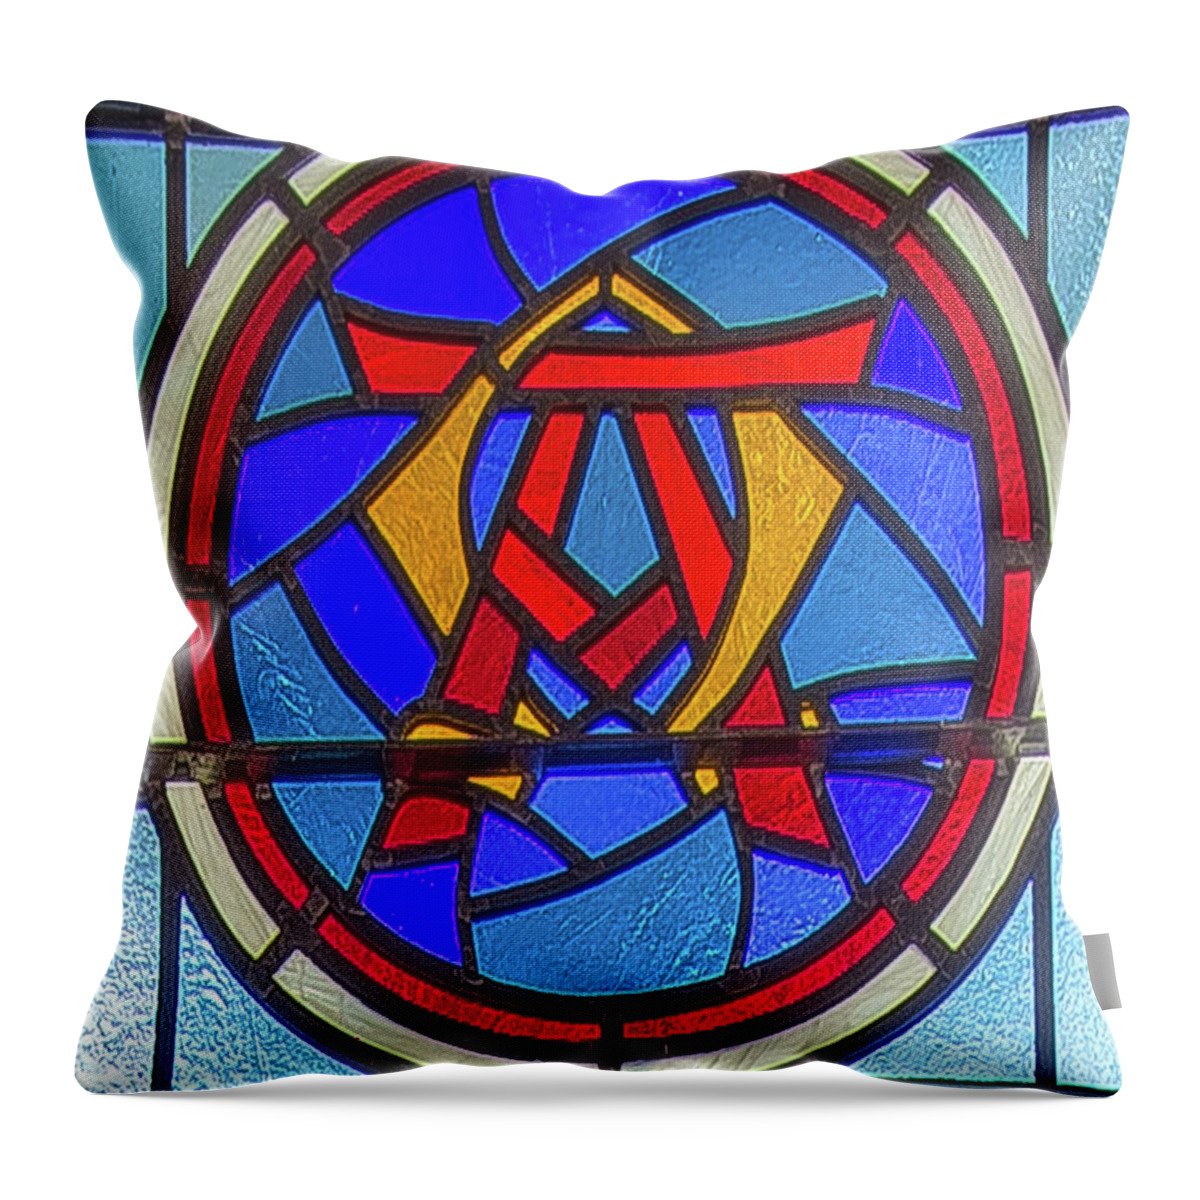 Saint Annes Throw Pillow featuring the digital art Saint Anne's Windows #24 by Jim Proctor